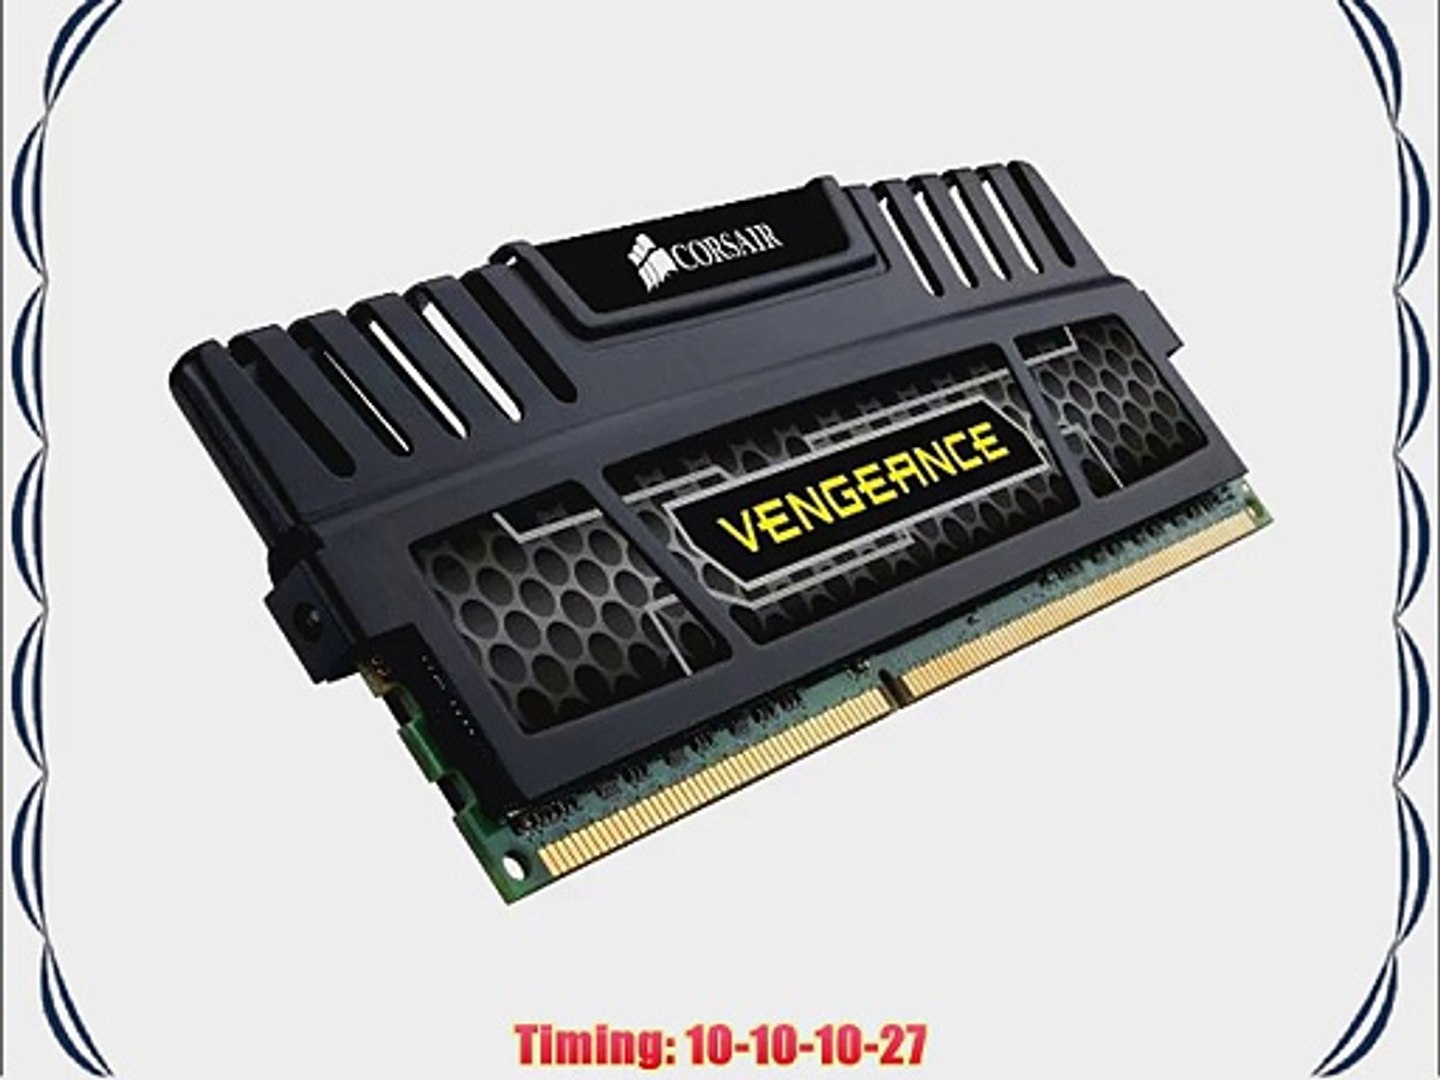 Corsair Vengeance 12GB (3x4GB) DDR3 2000 MHz (PC3 16000) Desktop Memory  (CMZ12GX3M3A2000C10) - video Dailymotion